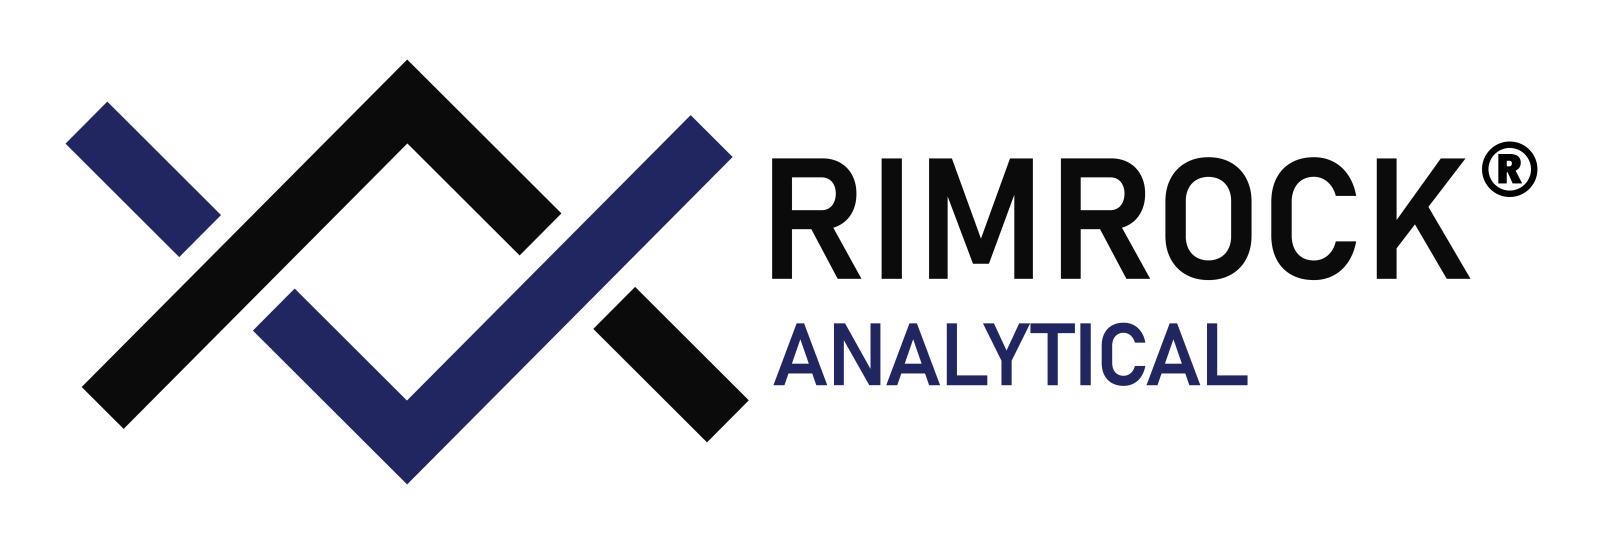 Rimrock Logo.png